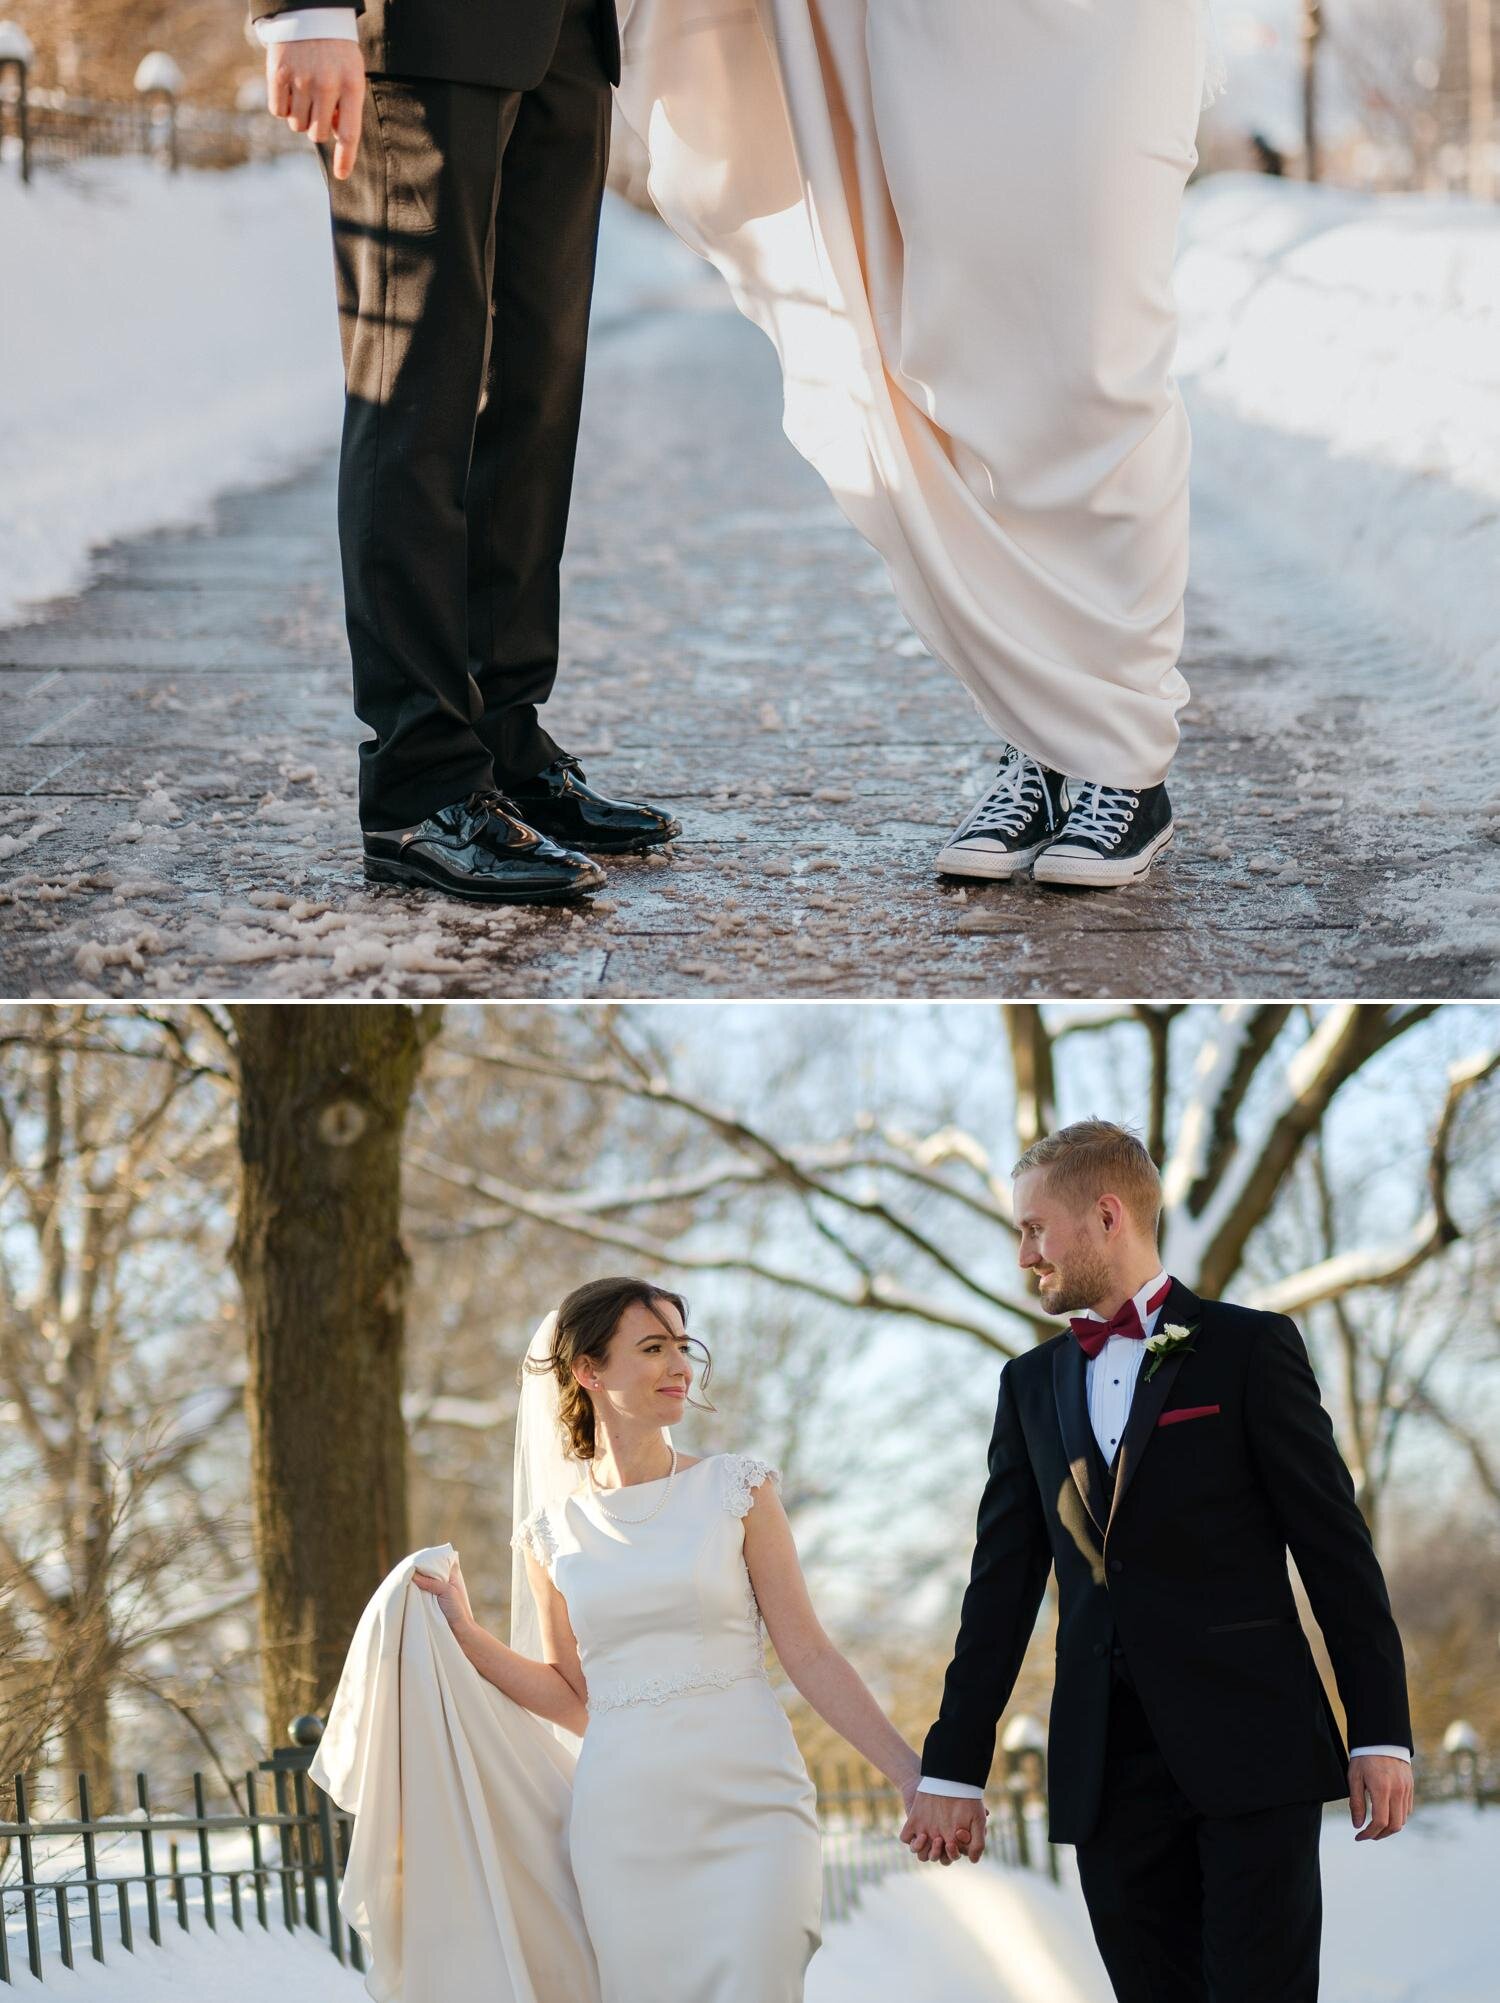 outdoor winter wedding photograph